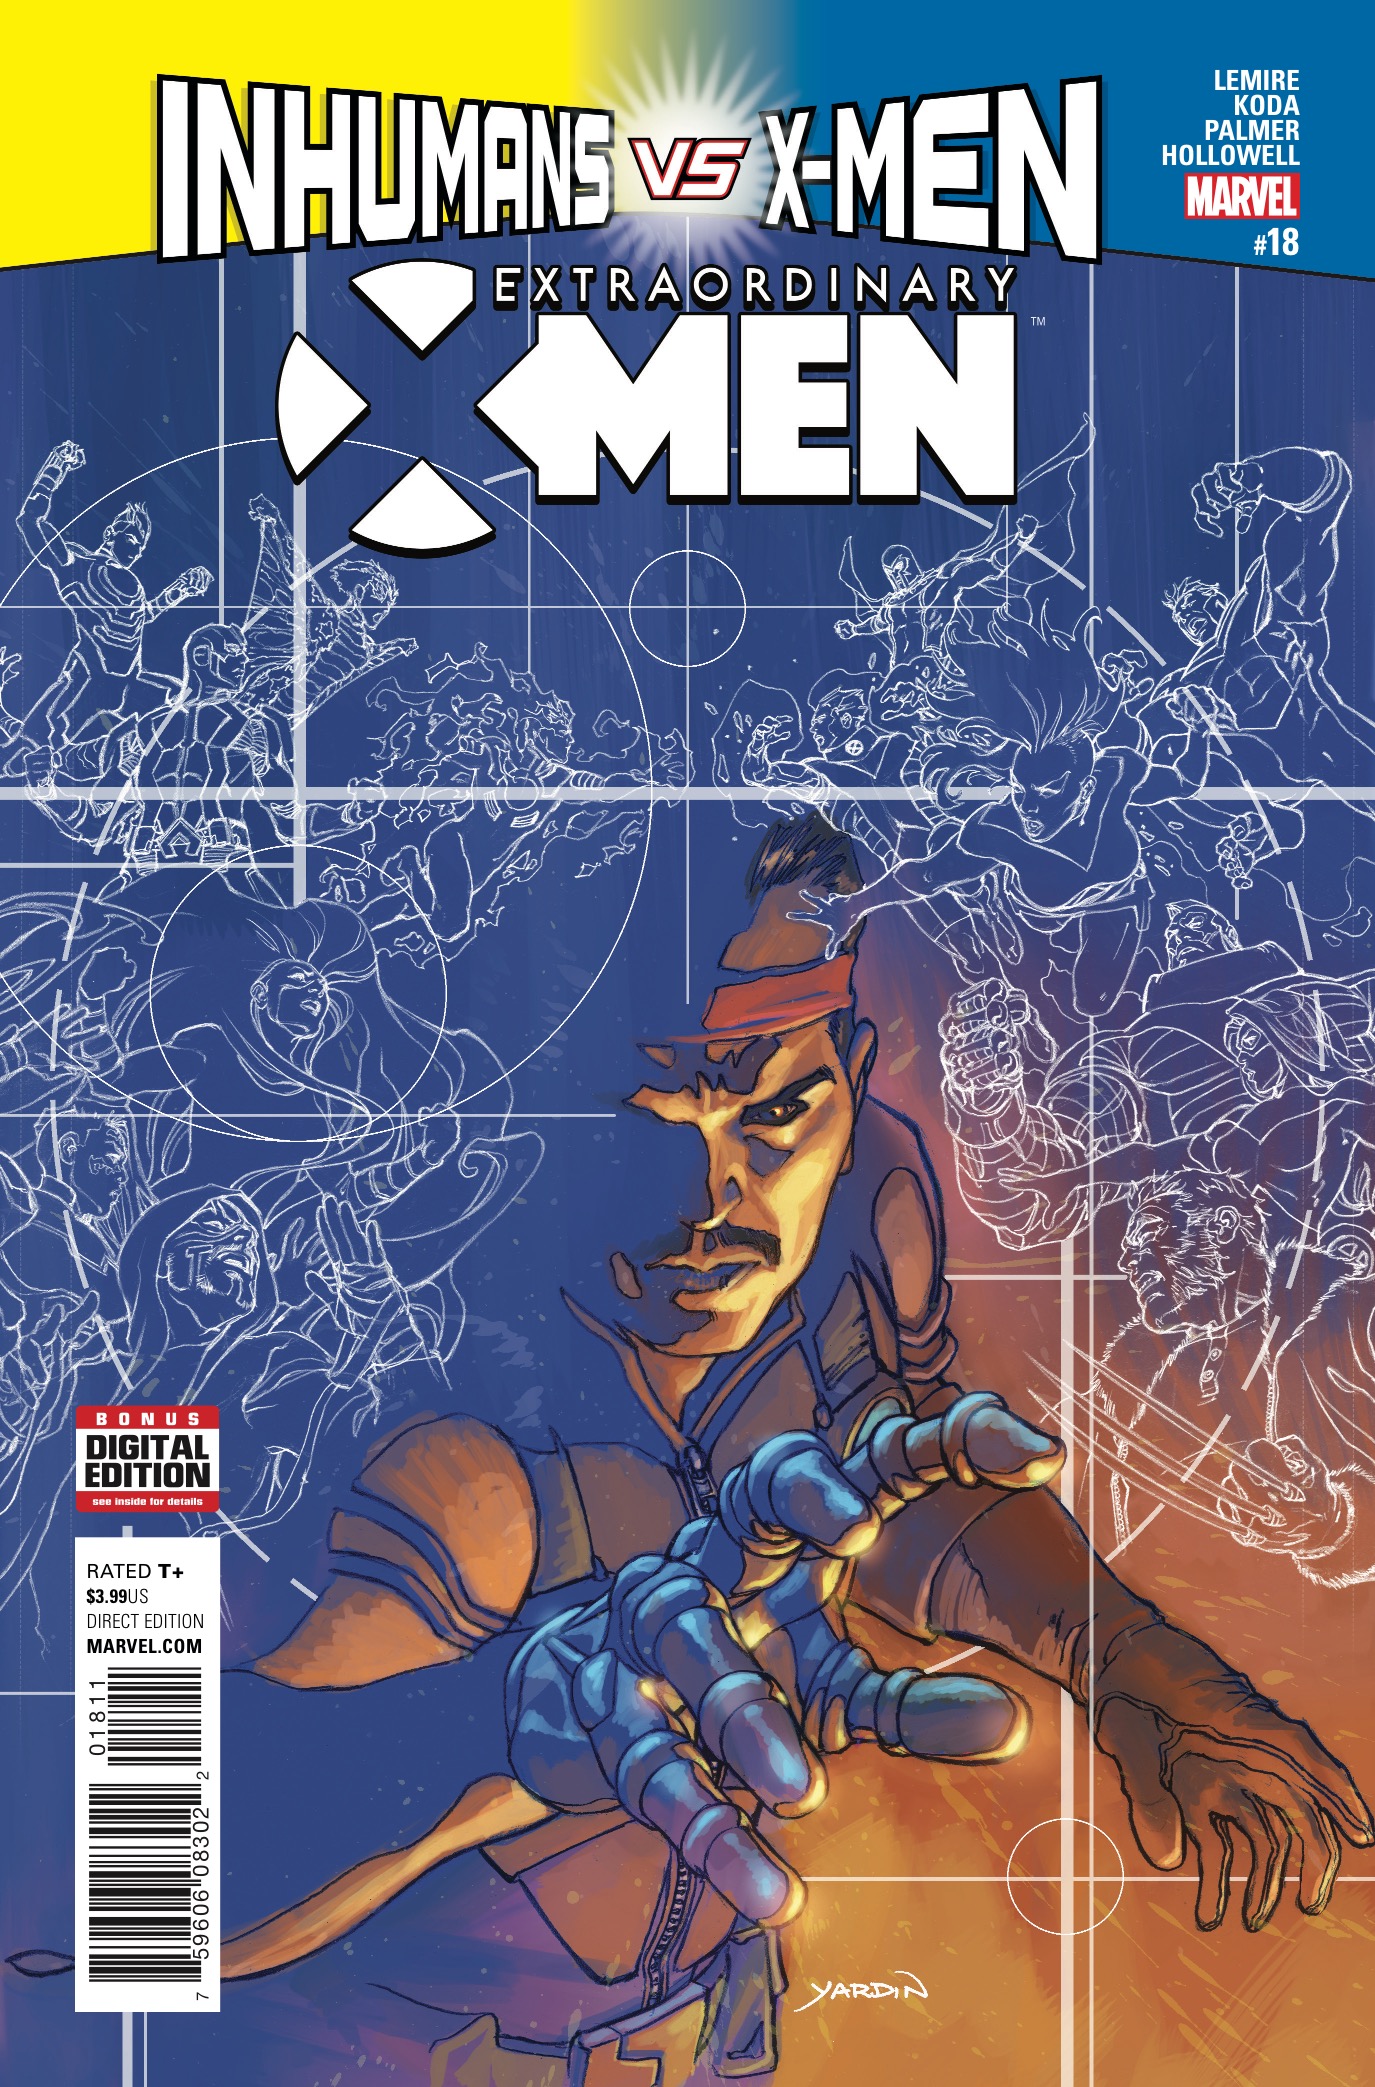 Extraordinary X-Men #18 Review